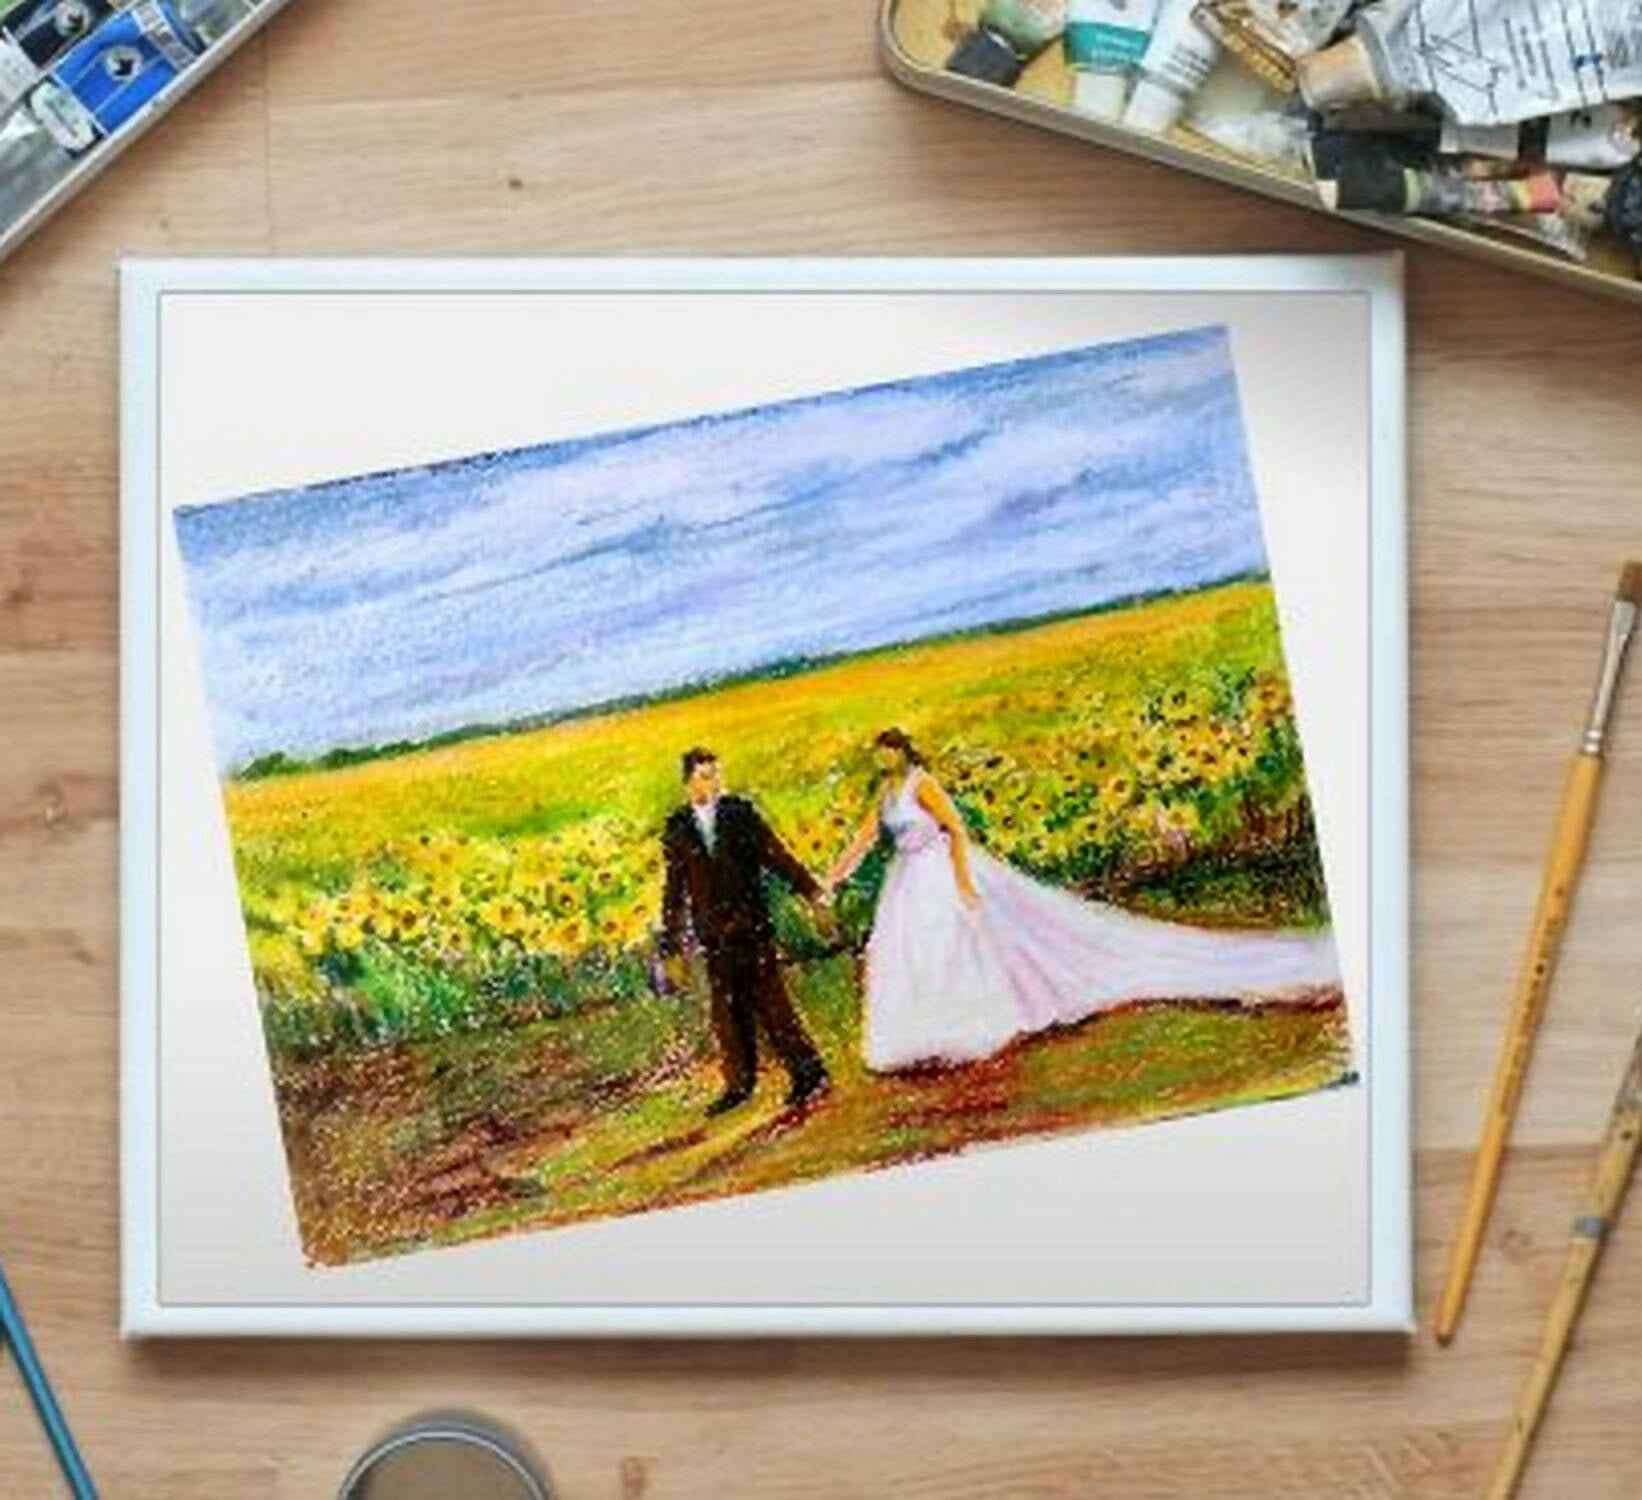 Romantic couple in Sunflower fields, oil pastels on paper